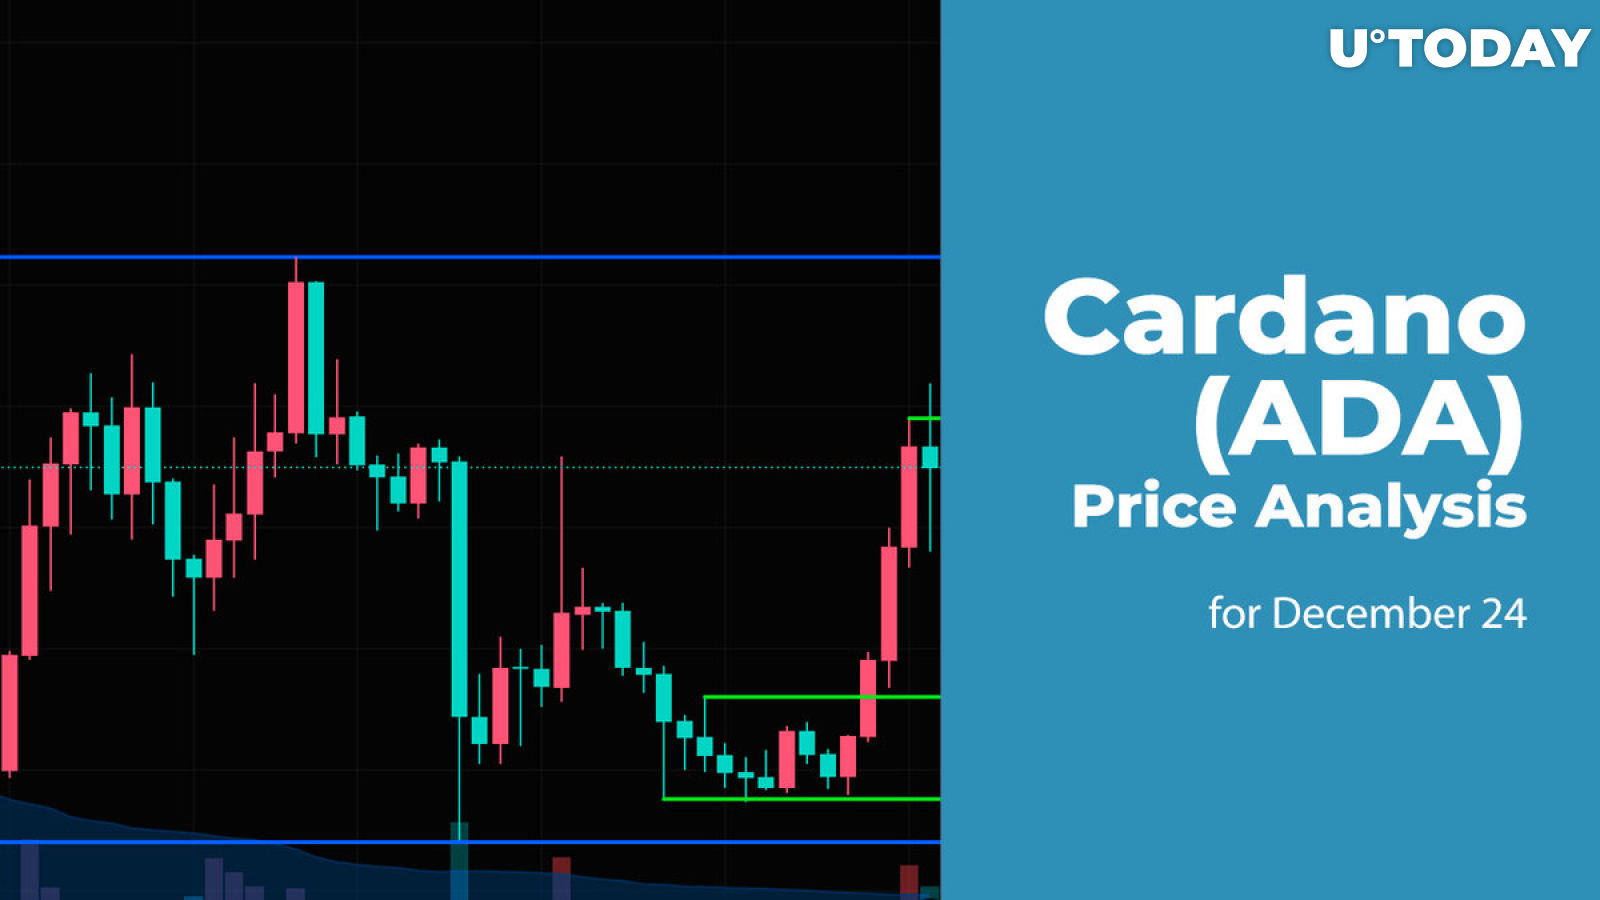 Cardano (ADA) Price Analysis for December 24